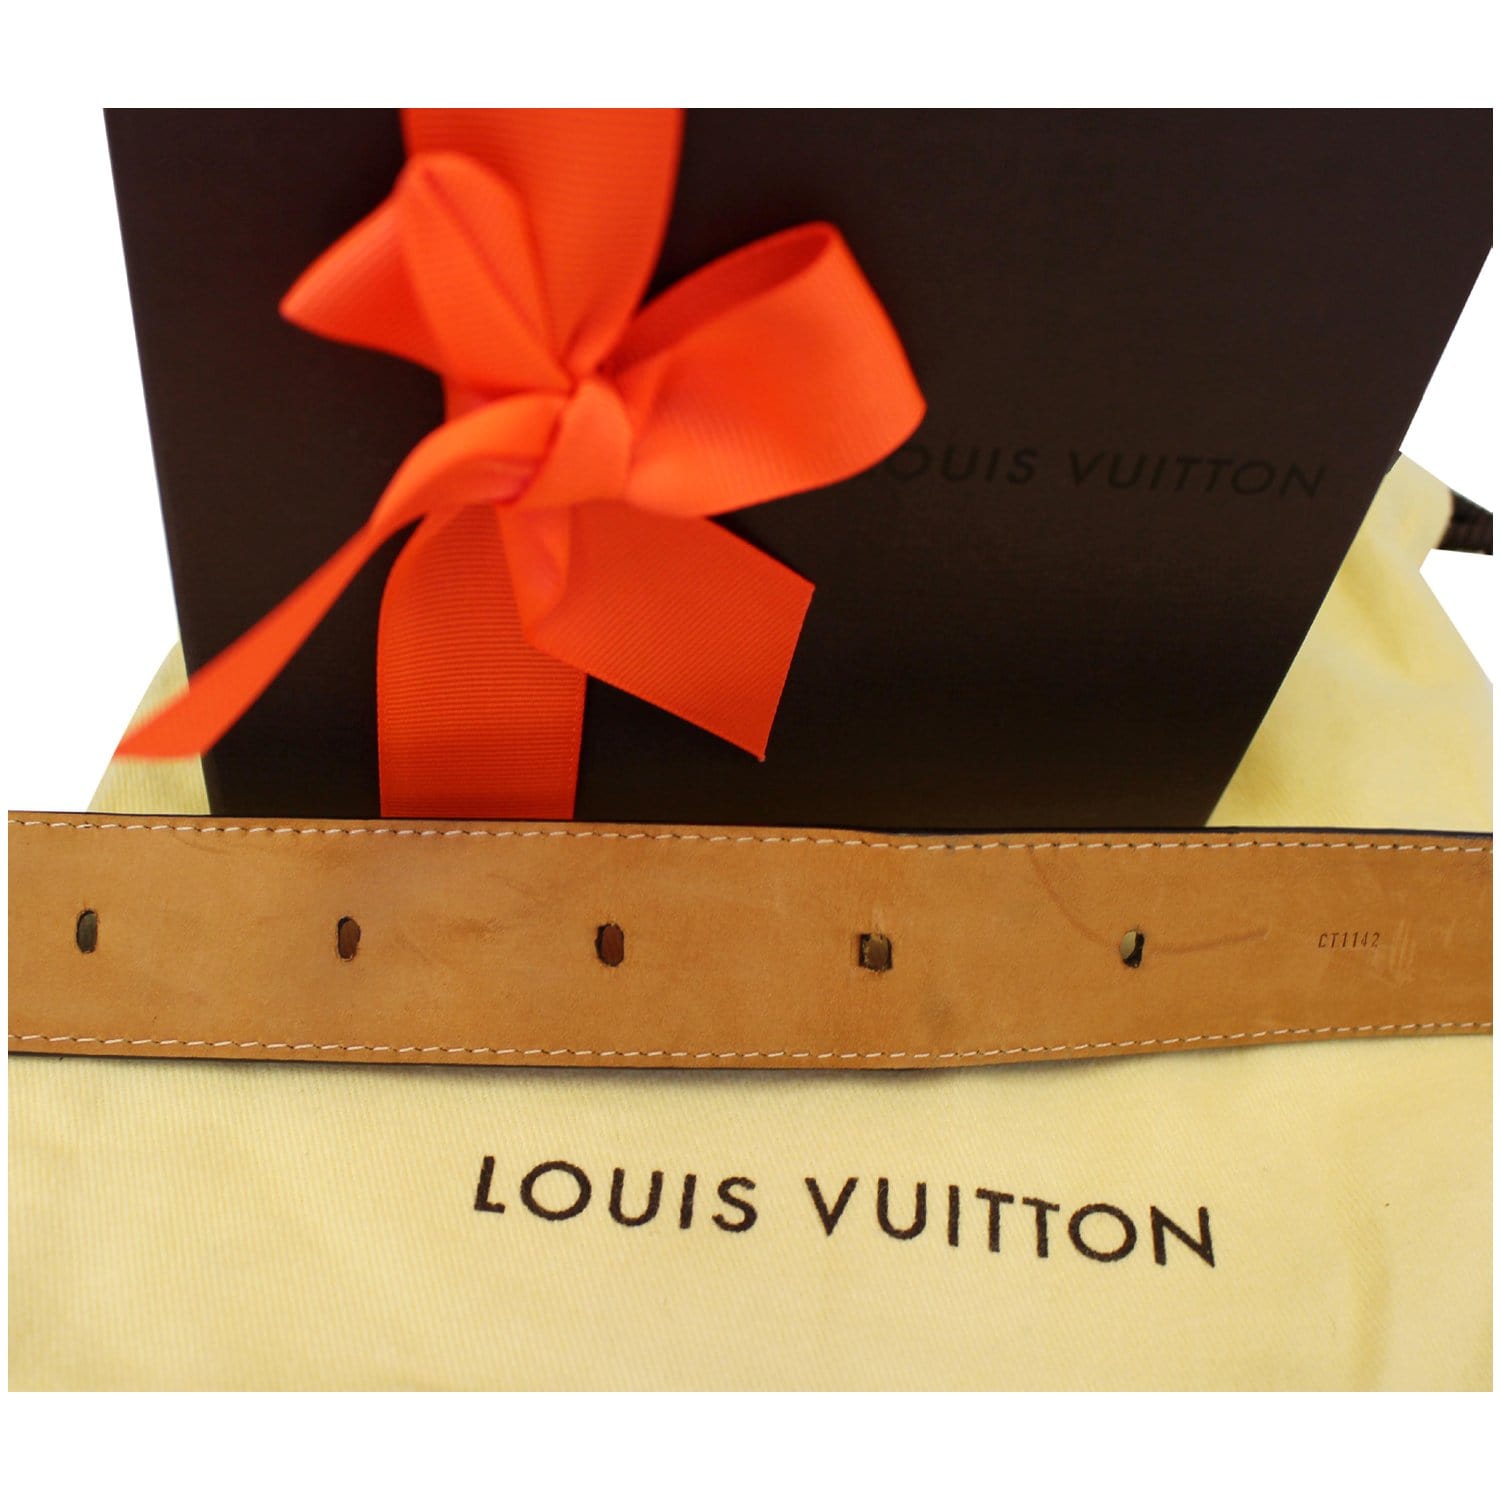 Louis Vuitton orange monogram belt for sale. I